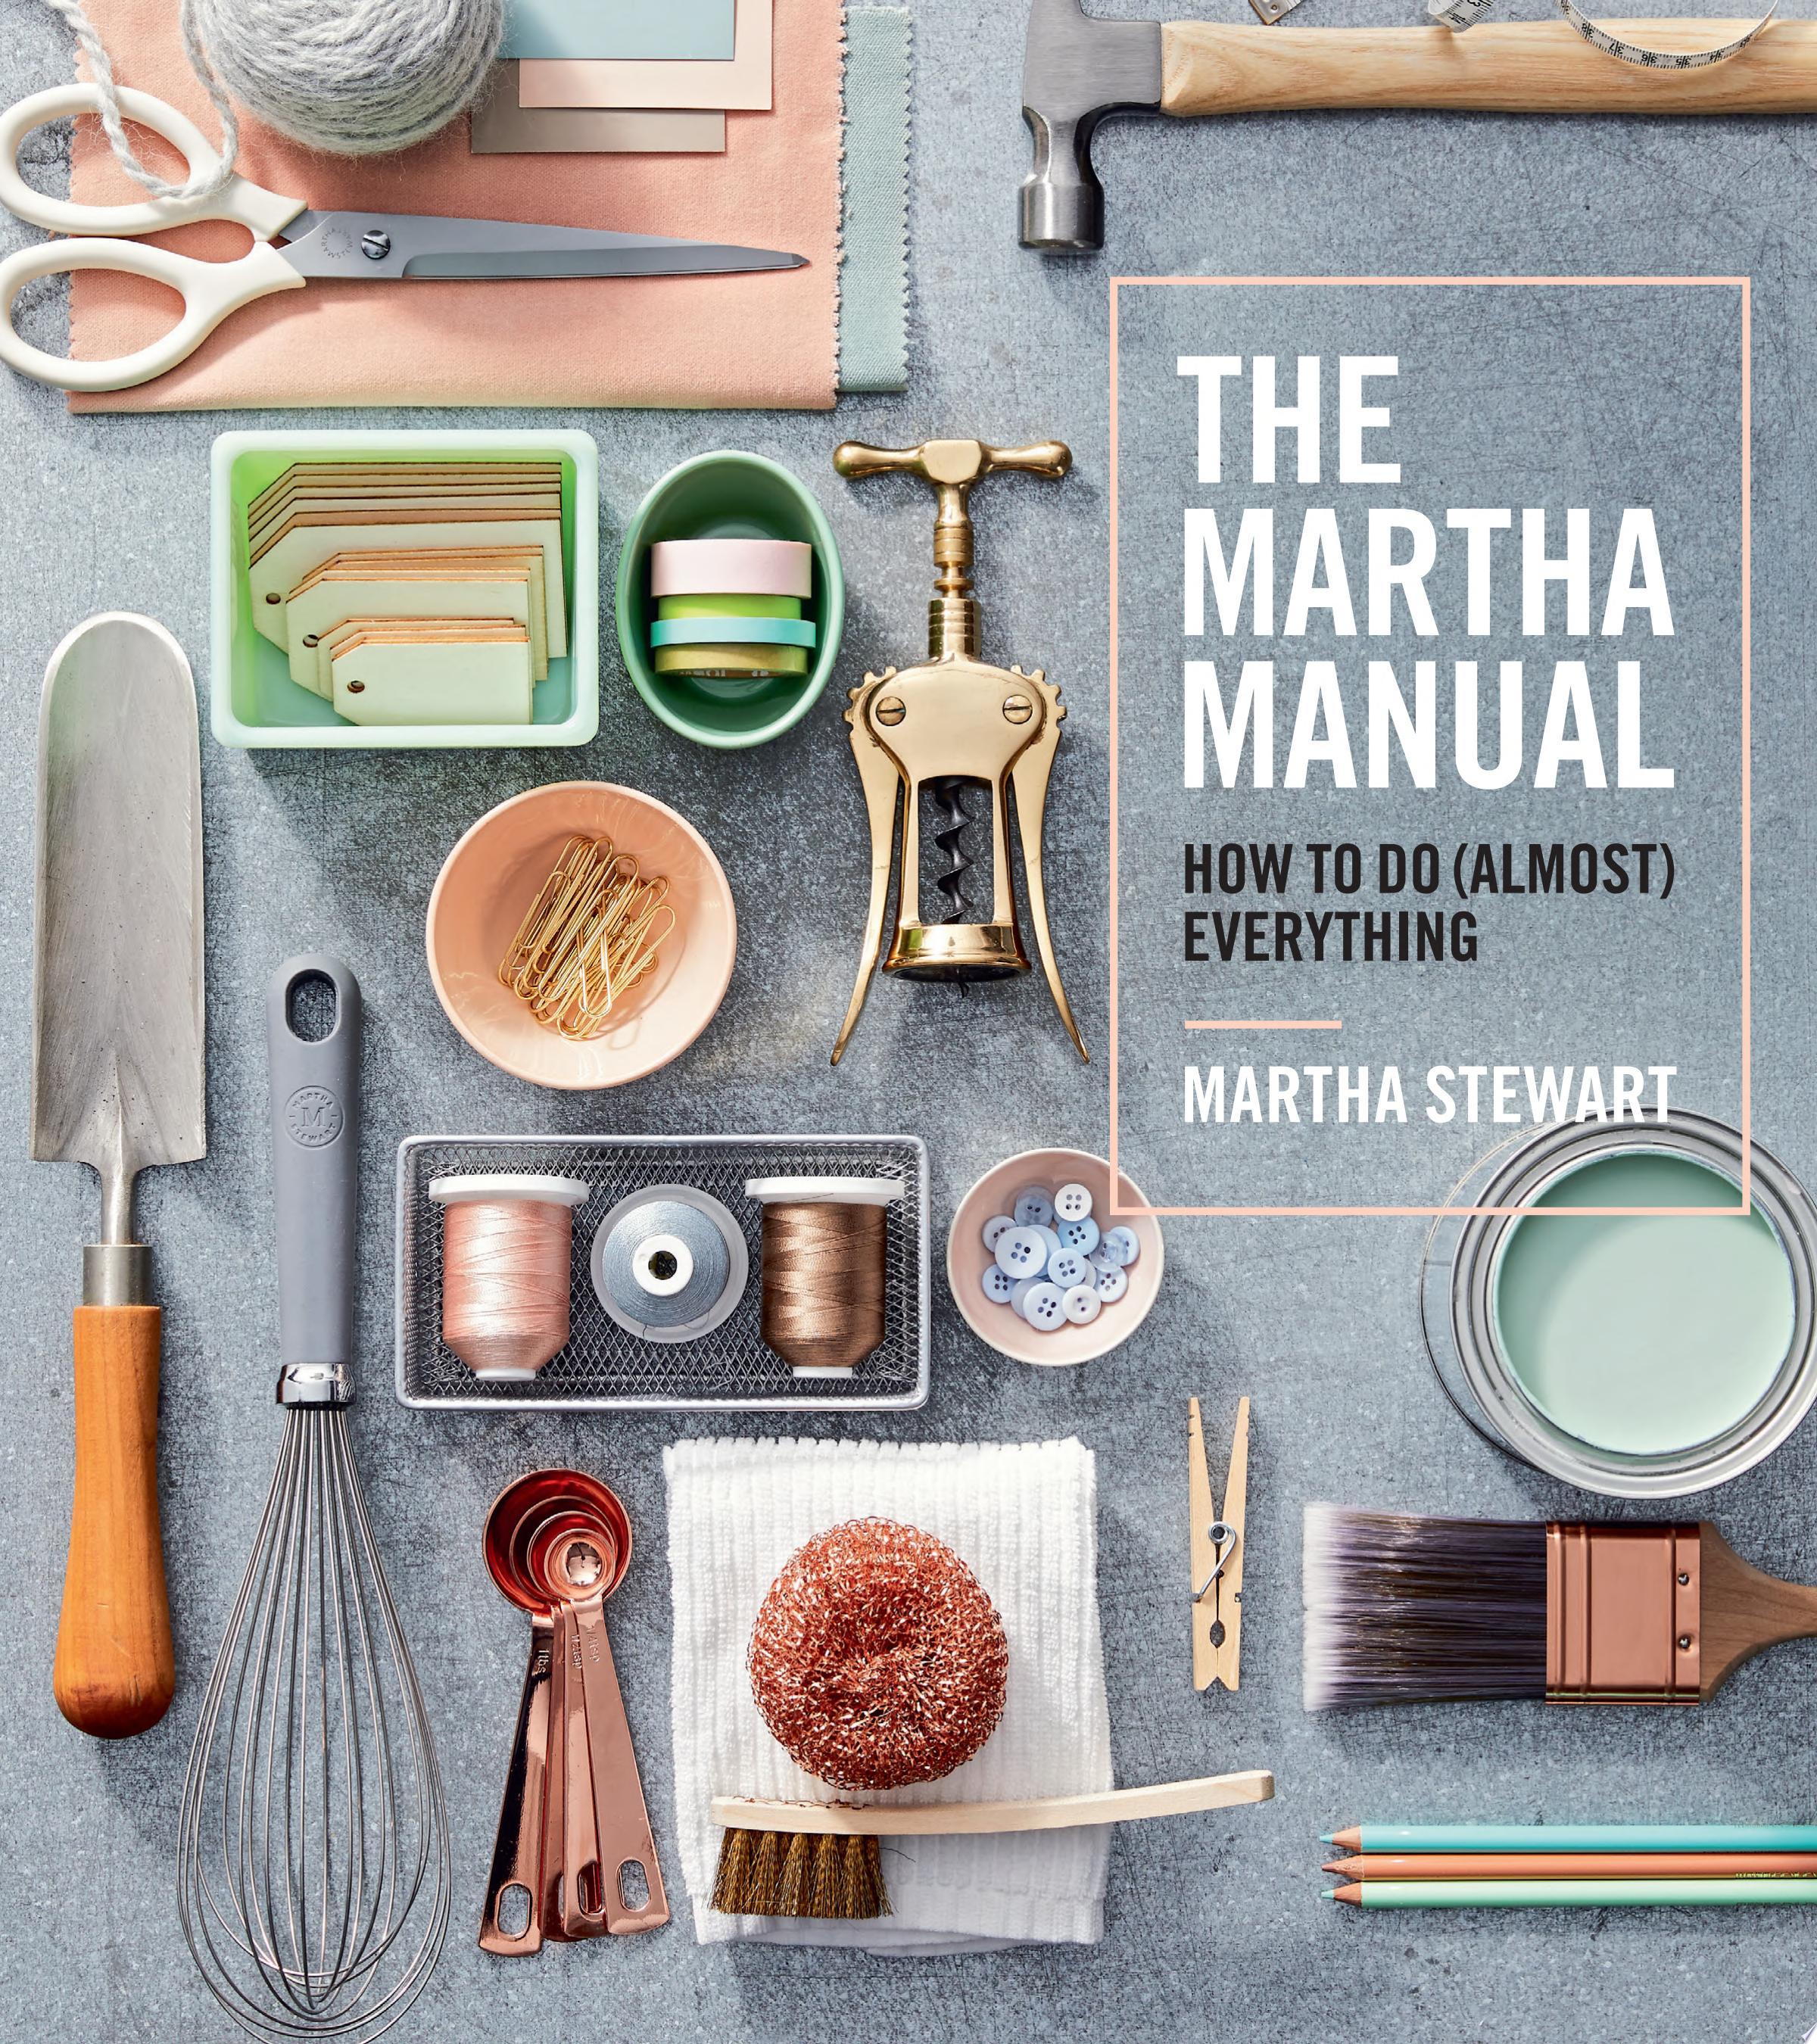 Image for "The Martha Manual"